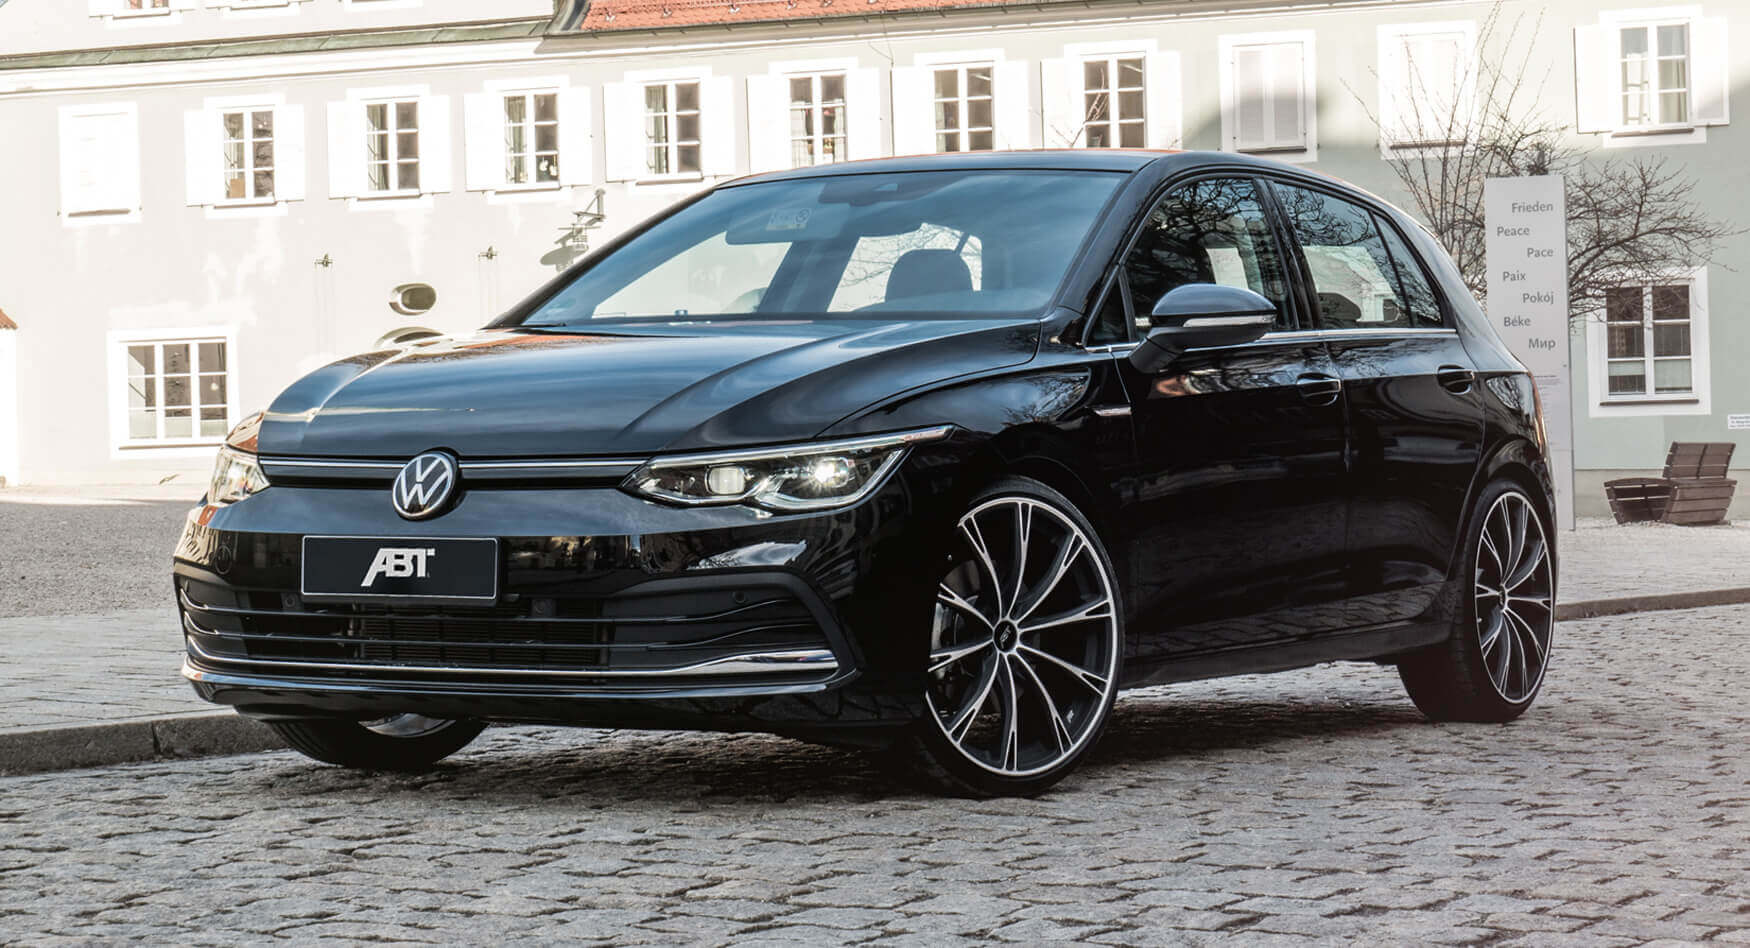 2020 Volkswagen Golf Mk8 Gets Its First Tuning Job, Sort Of